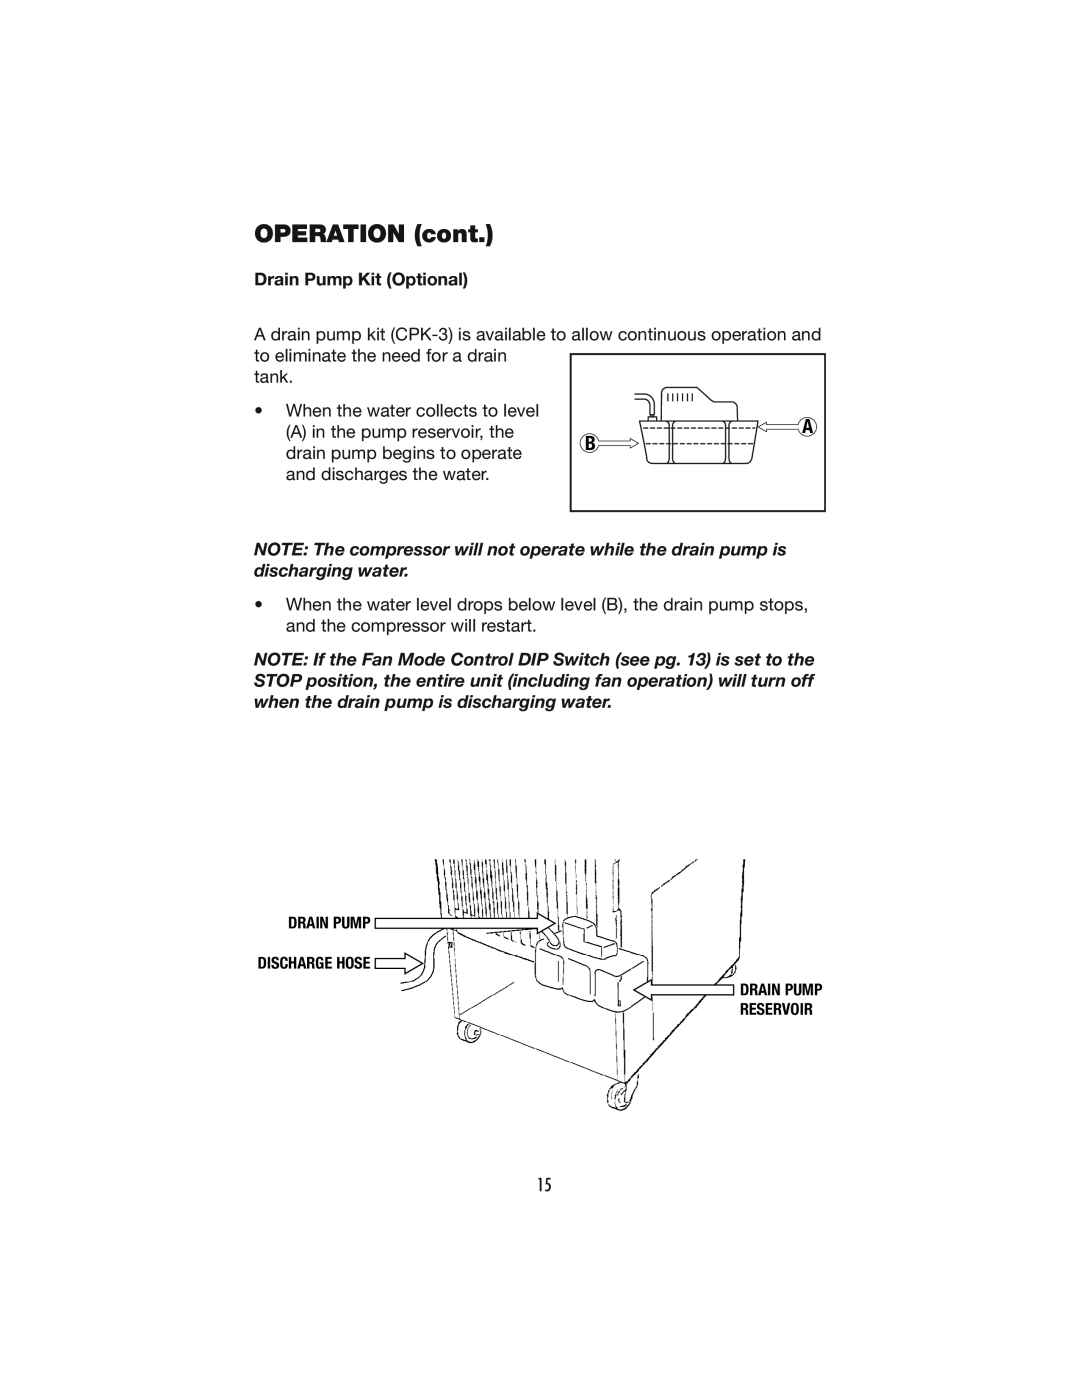 Denso PRO 18 operation manual Drain Pump Kit Optional, OPERATION cont 